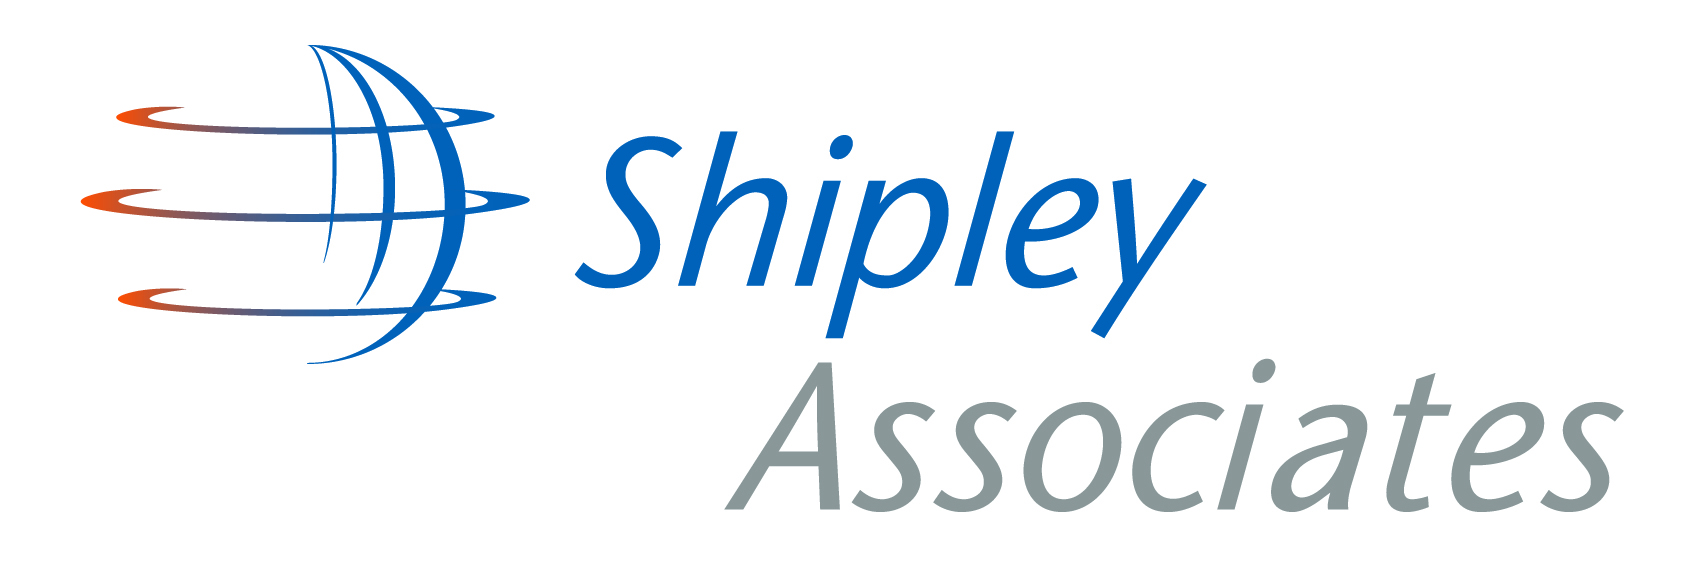 Shipley Logo double lineGlobe Horizontal